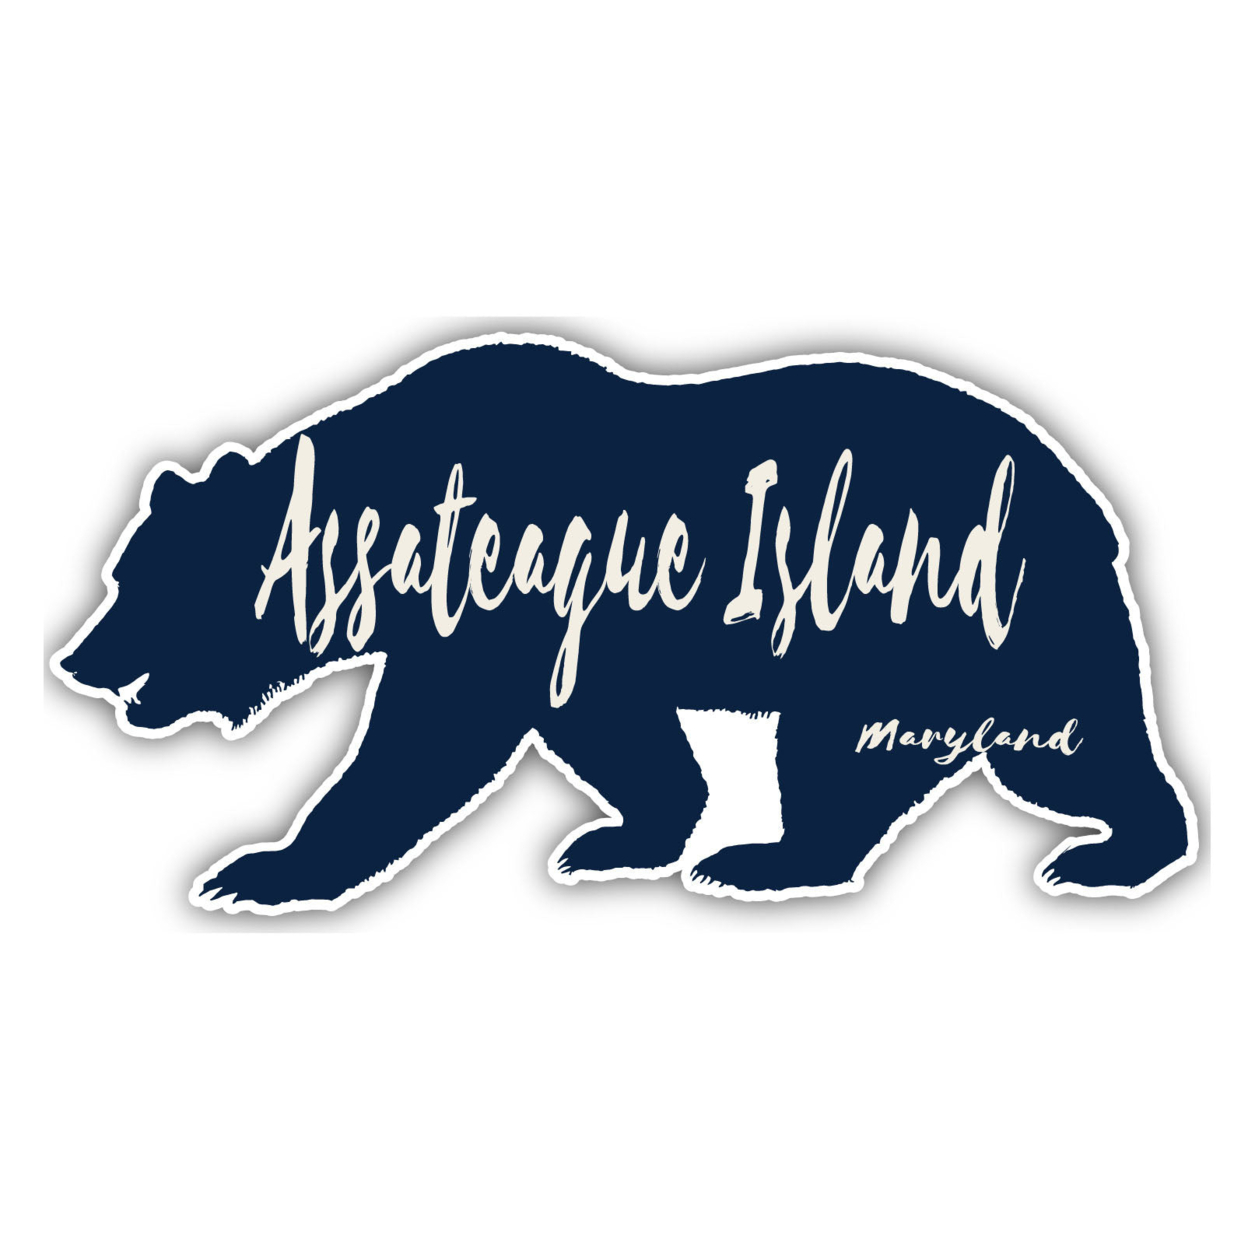 Assateague Island Maryland Souvenir Decorative Stickers (Choose Theme And Size) - Single Unit, 12-Inch, Bear